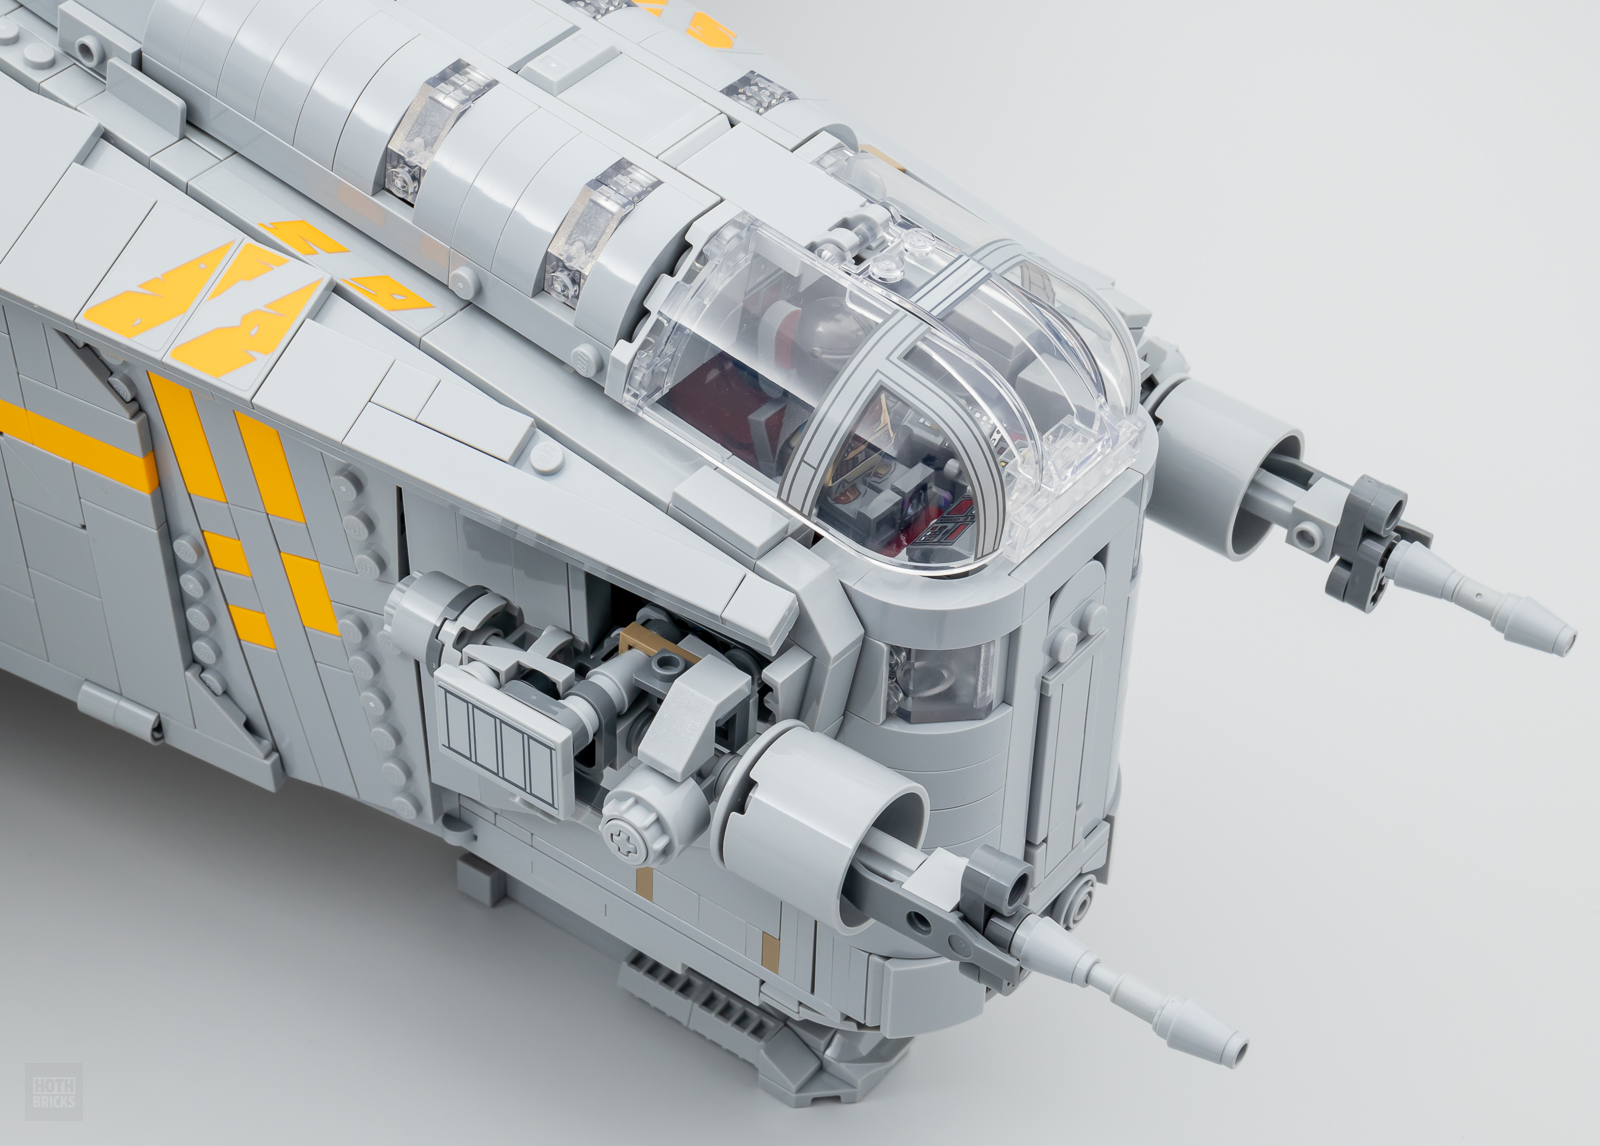 Star Wars: The Mandalorian Razor Crest UCS LEGO Set Black Friday Deal Is  Back